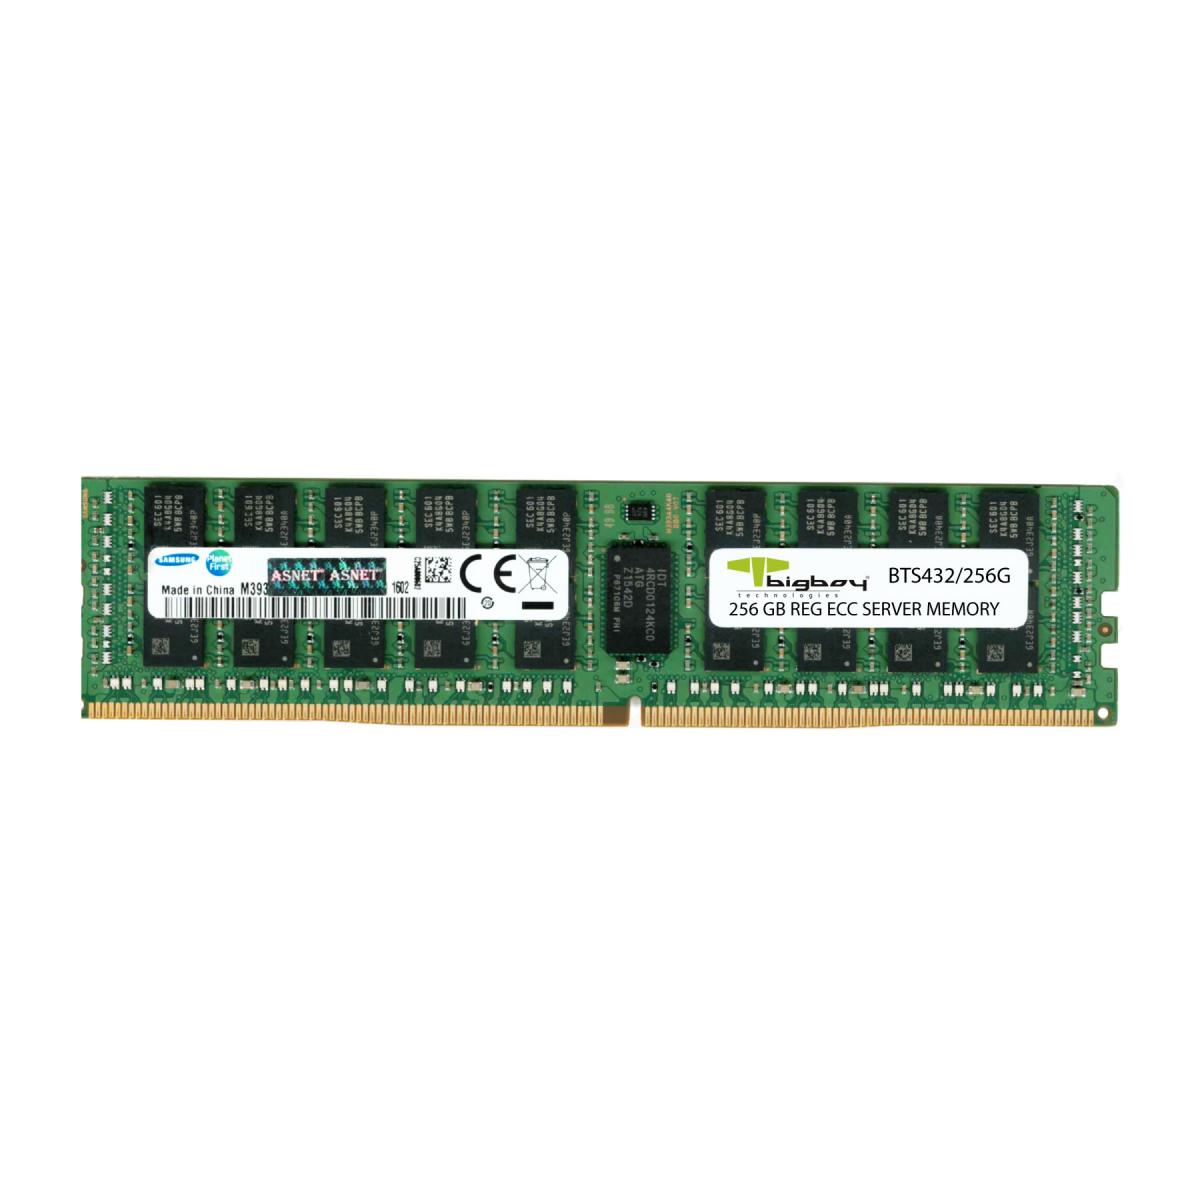 Bigboy 256GB DDR4 3200MHz CL22 Registered Sunucu Rami BTS432/256G